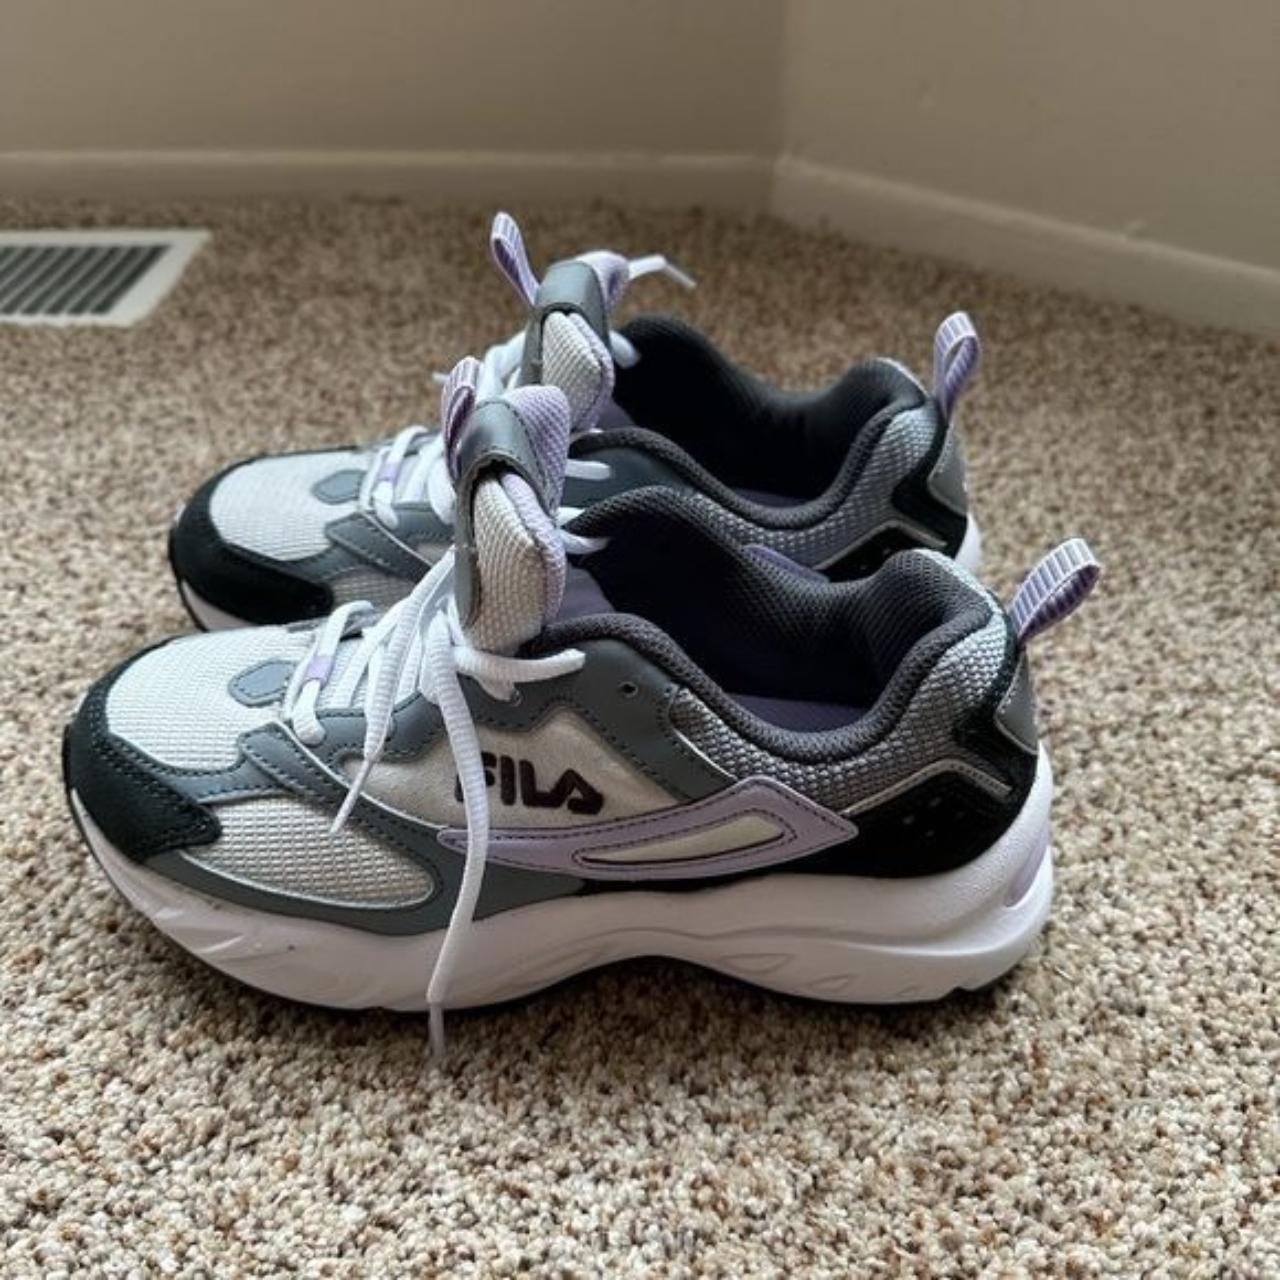 FILA Women’s Lace Up Sneakers Grey/Lilac Size 6.5... - Depop